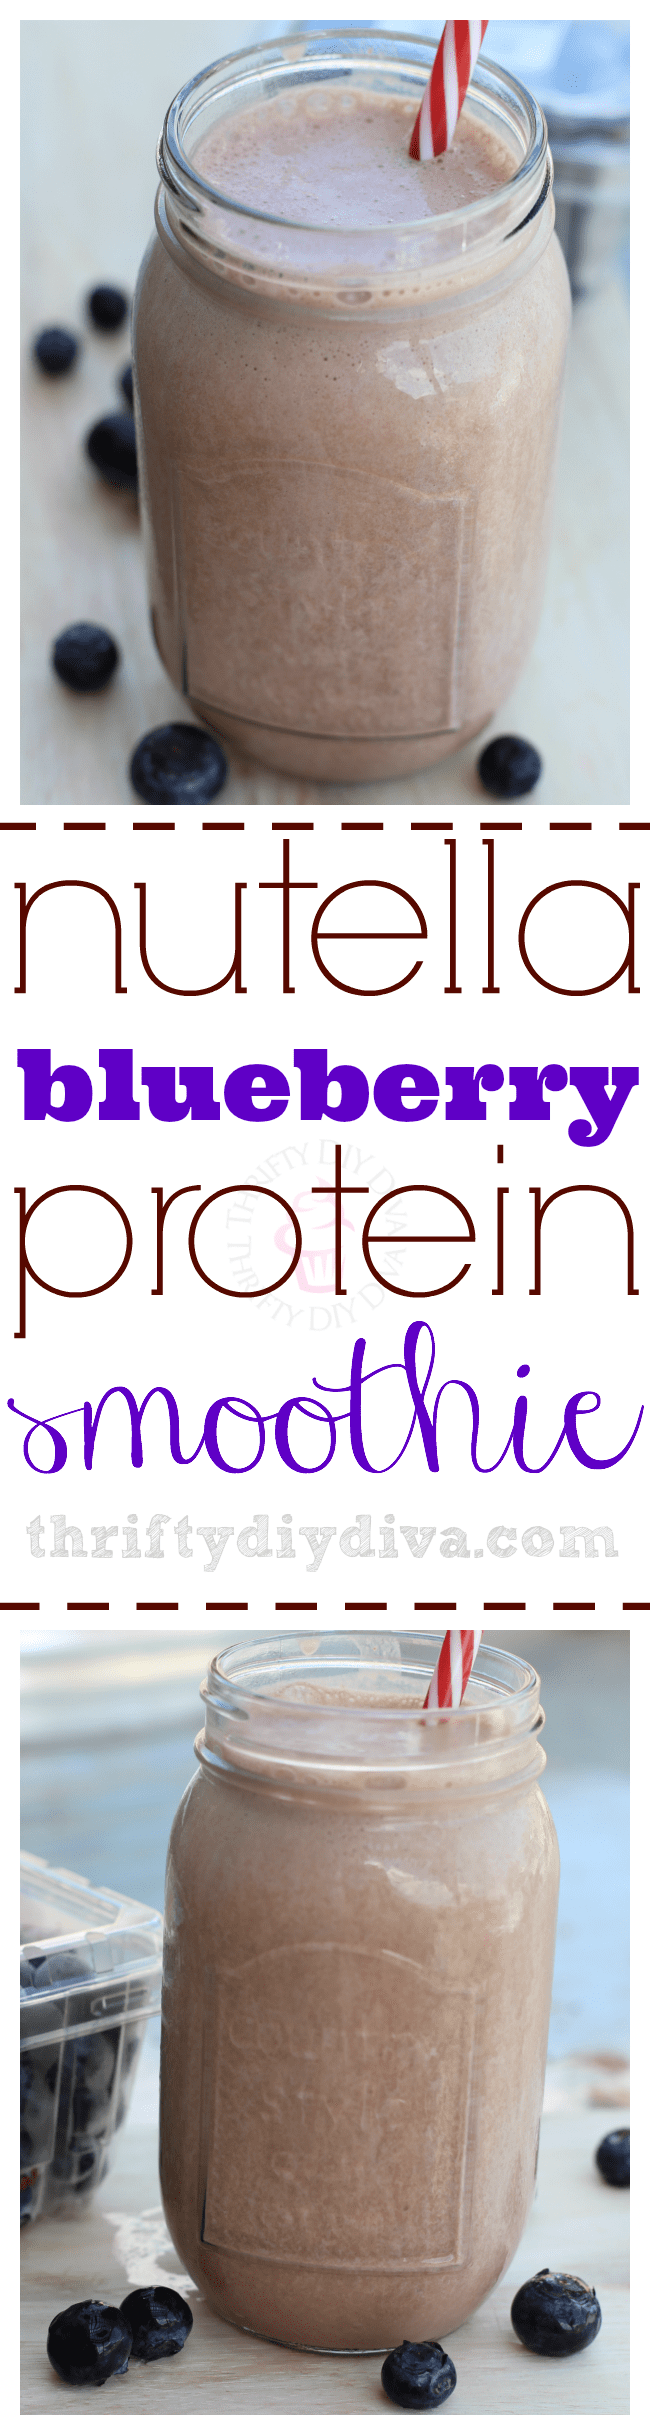 Nutella Blueberry Smoothie recipe